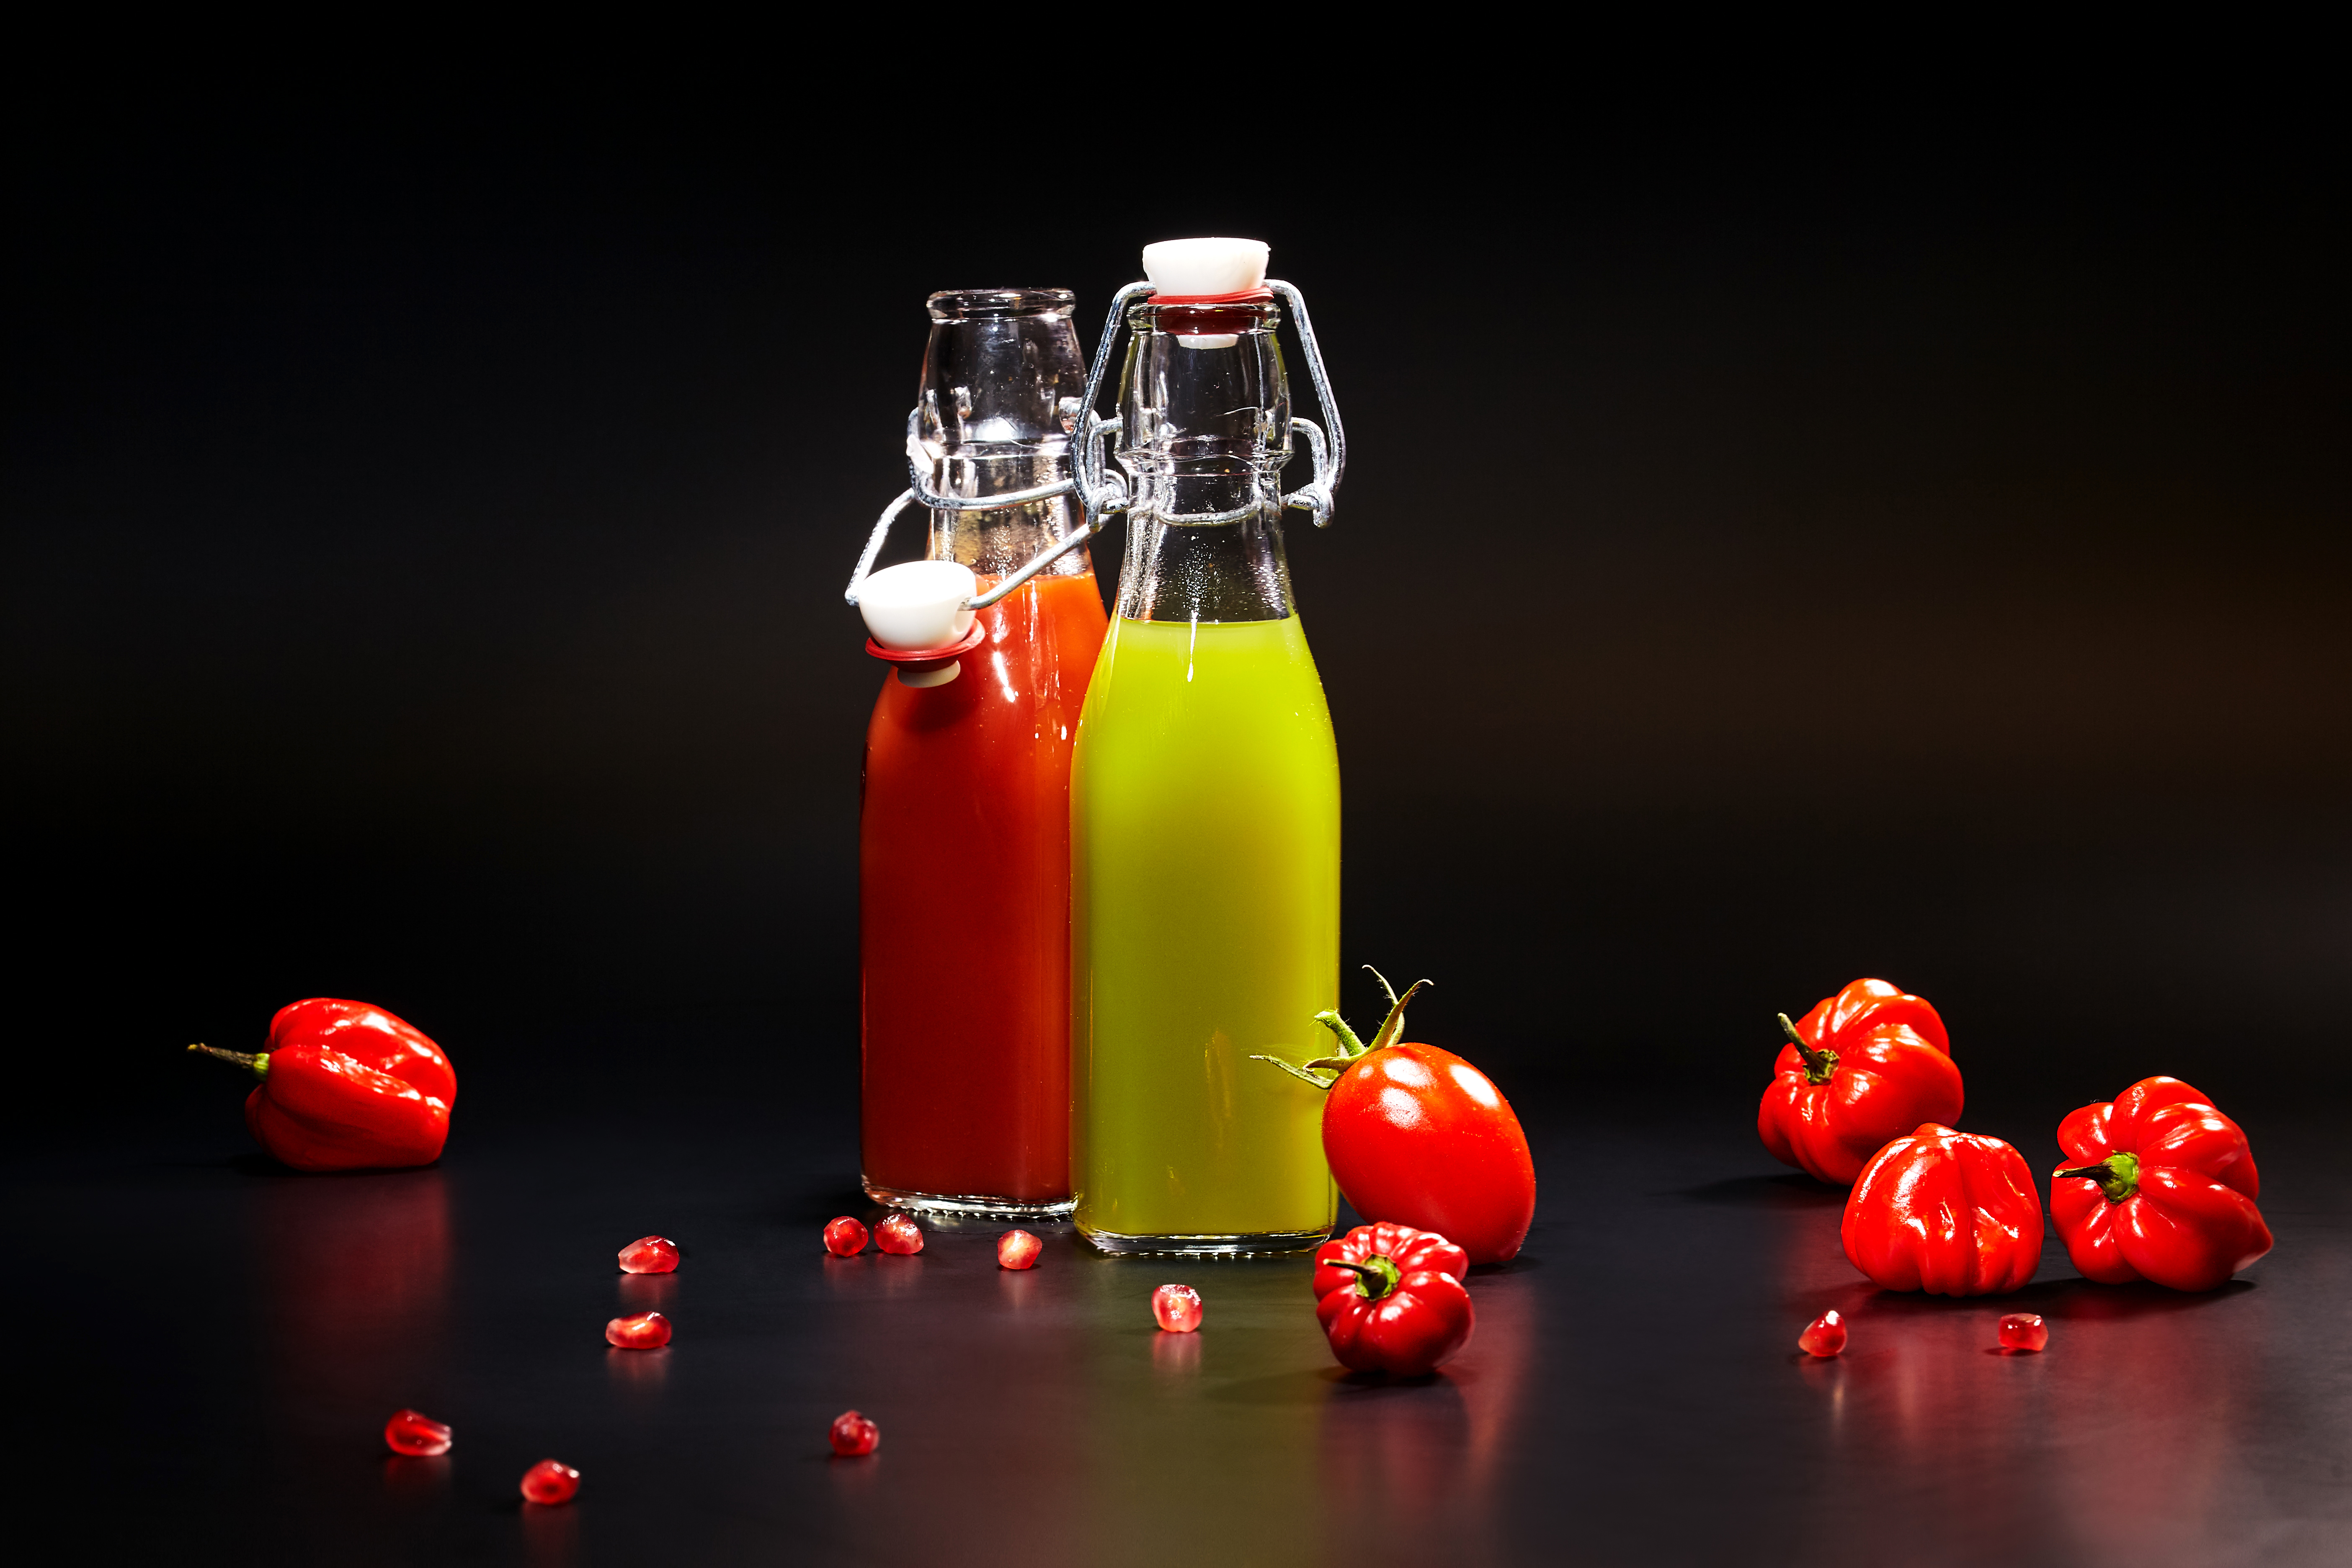 Bottle Juice Tomato 5616x3744